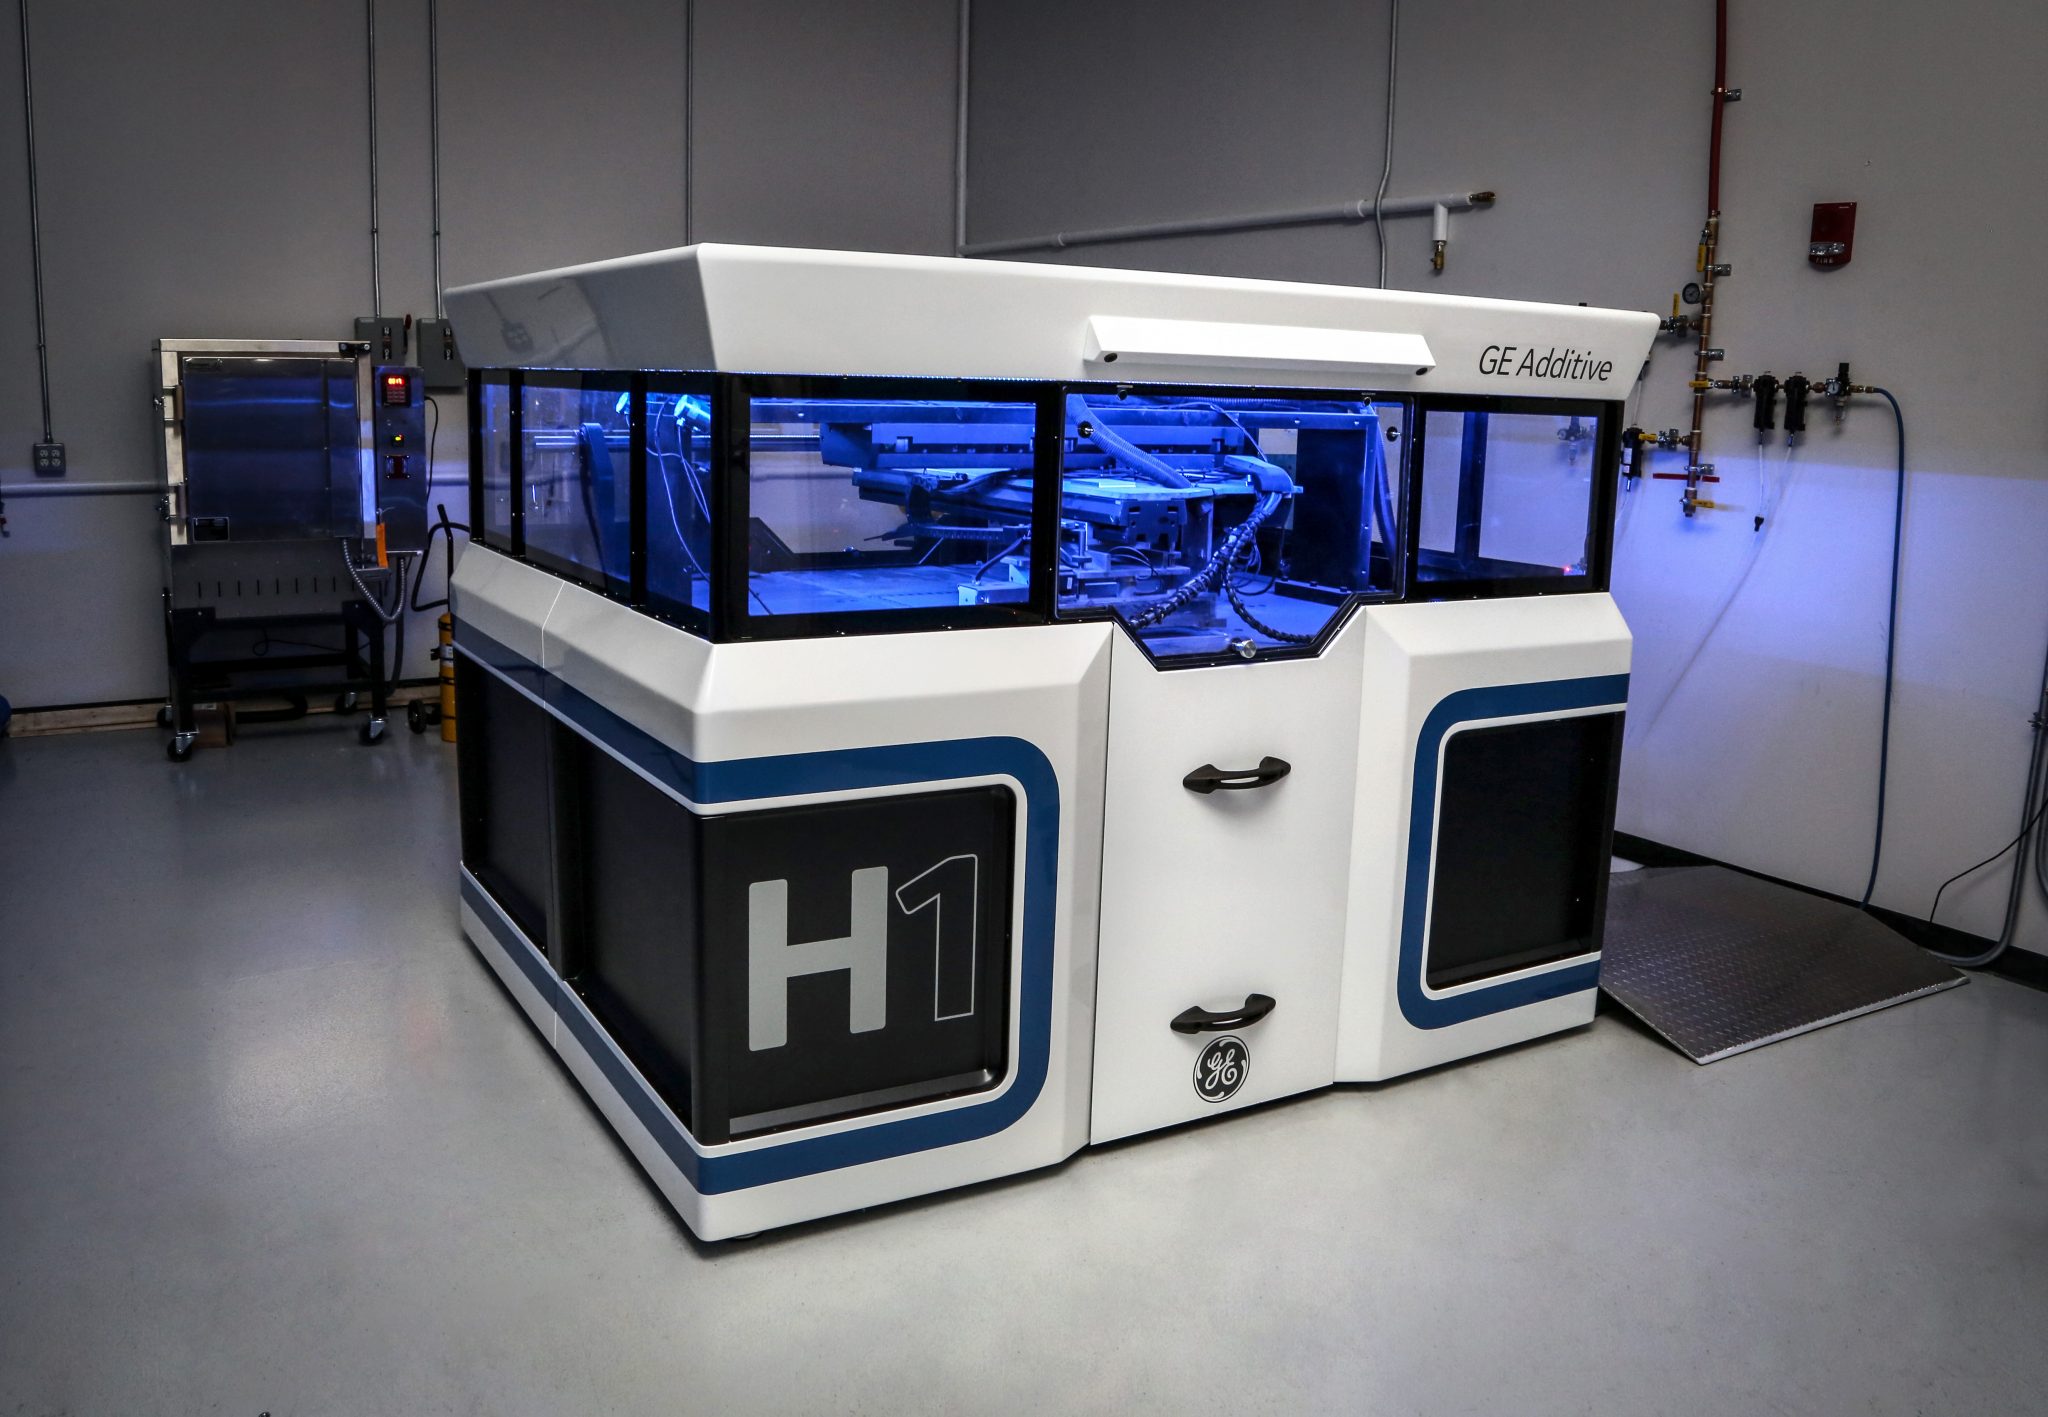 The prototype H1 binder jet 3D printer from GE Additive. Photo via GE